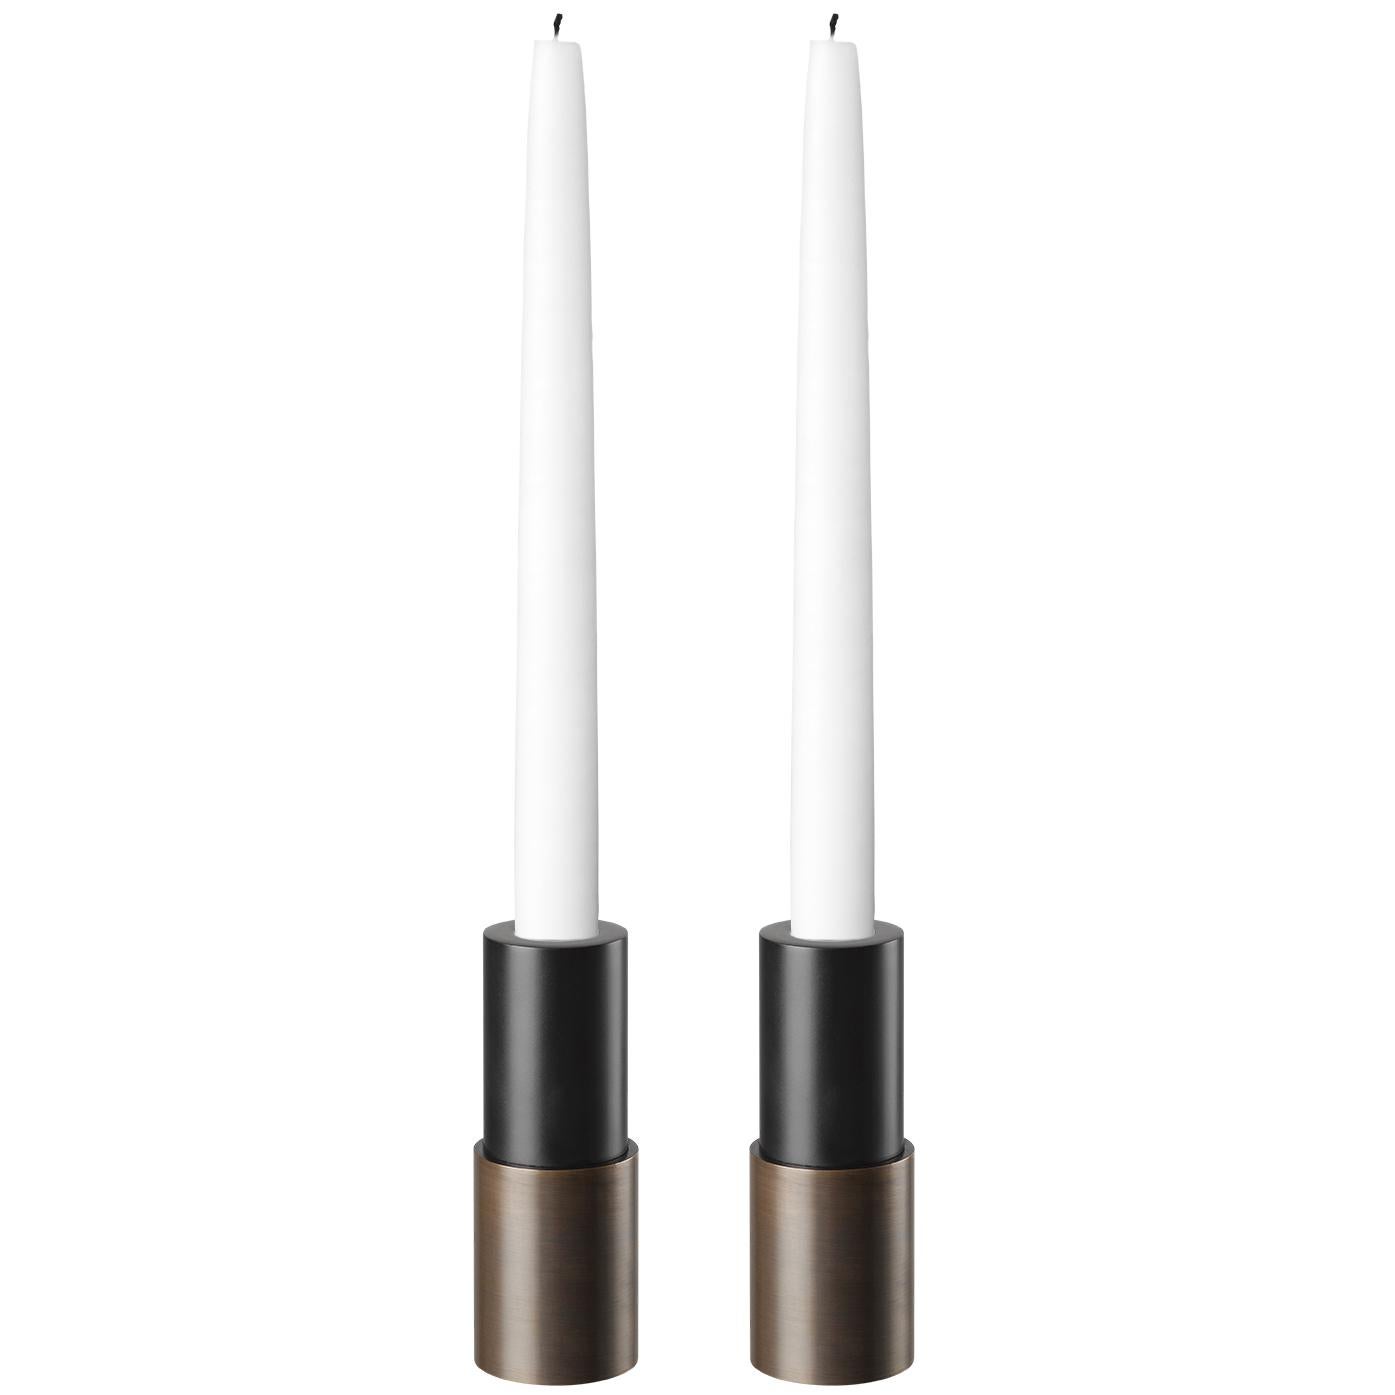 Pair of Candlesticks Model #20 by Space Copenhagen for GUBI For Sale 10